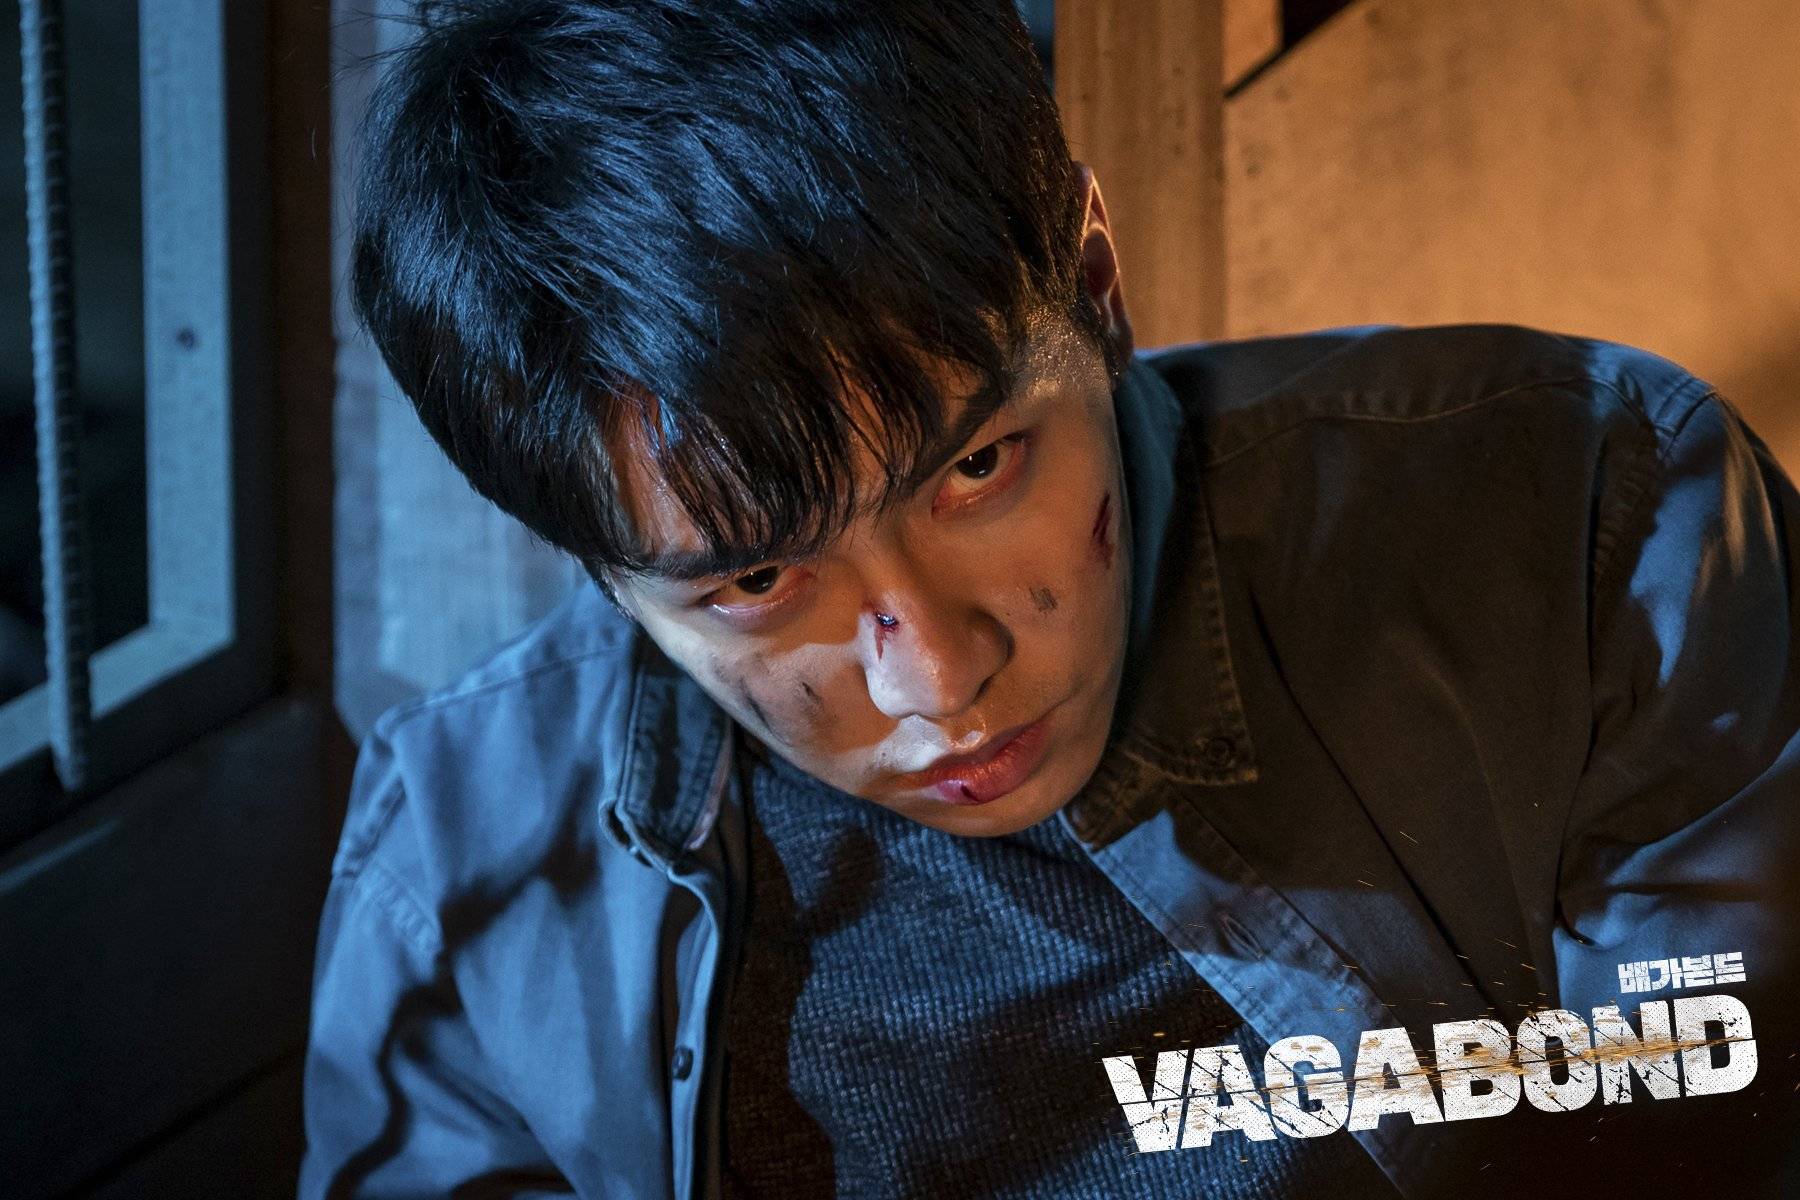 Fruity masser Træts webspindel Photos] New Stills Added for the Korean Drama 'Vagabond' @ HanCinema